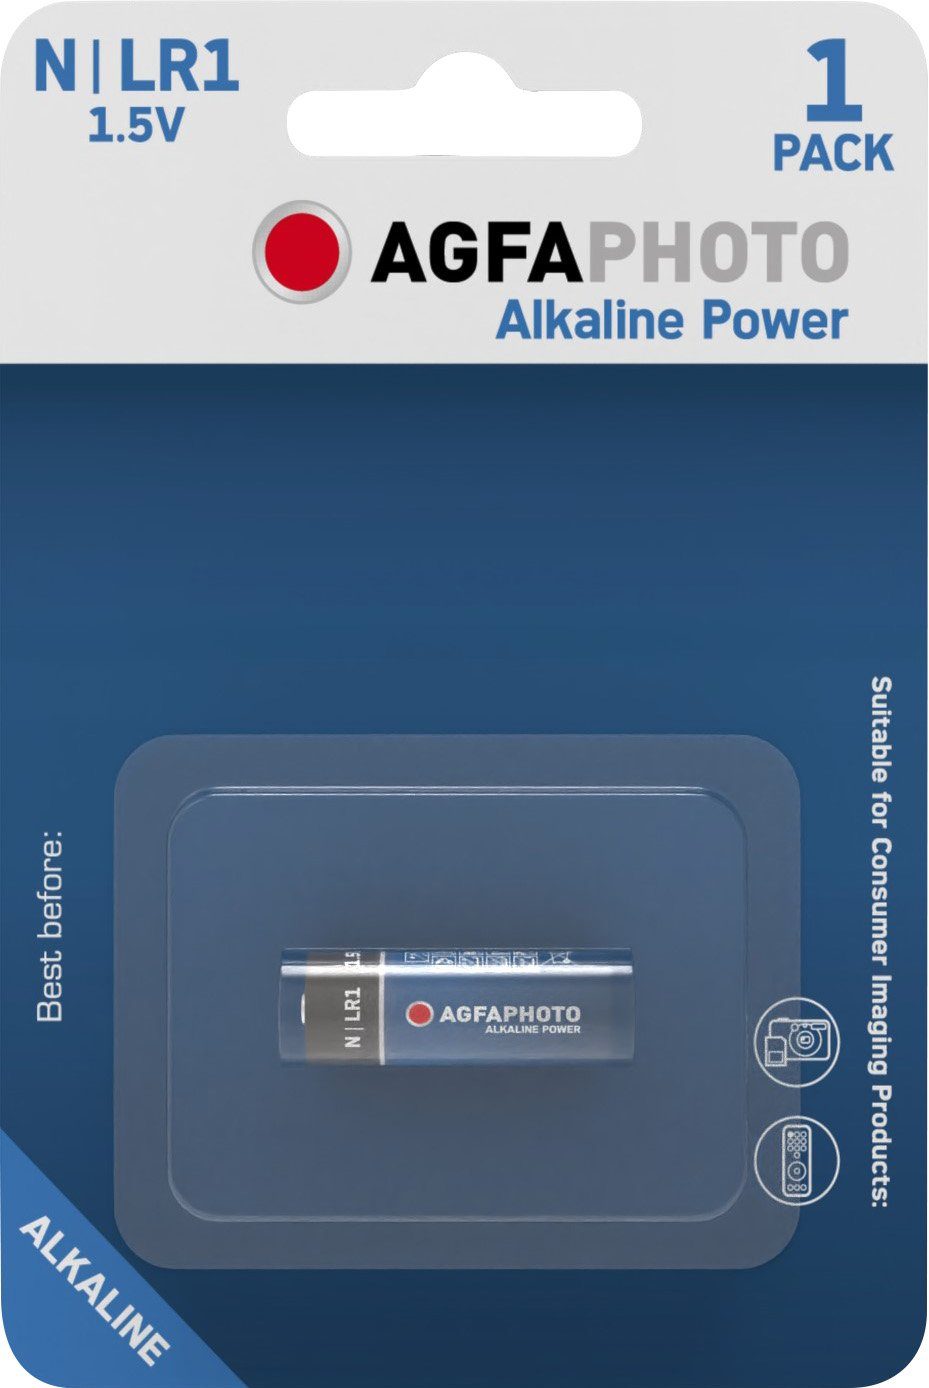 AgfaPhoto Agfaphoto Batterie Alkaline, (1-Pa Blister LR1, N, Retail 1.5V Batterie Power